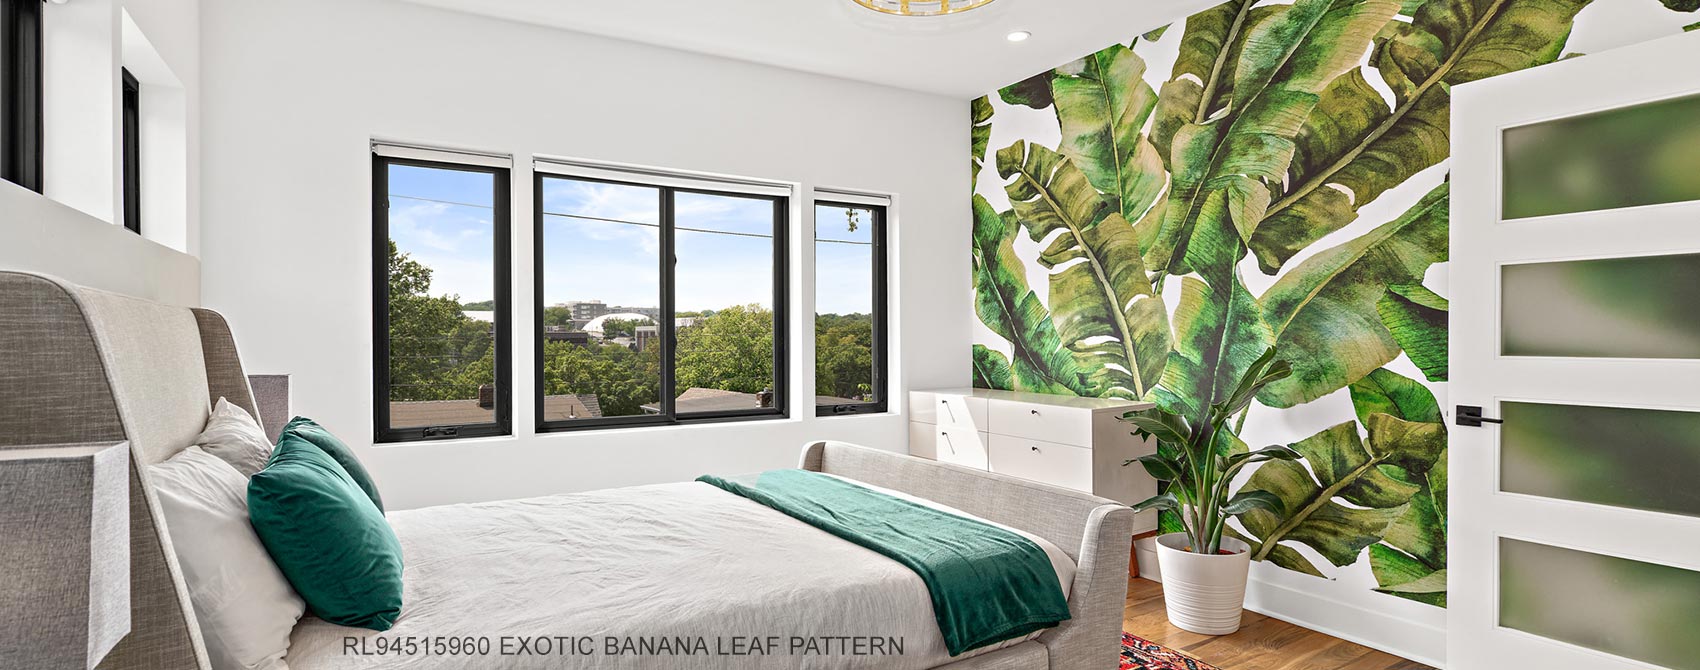 Exotic Banana Leaf Pattern Wallpaper in bedroom